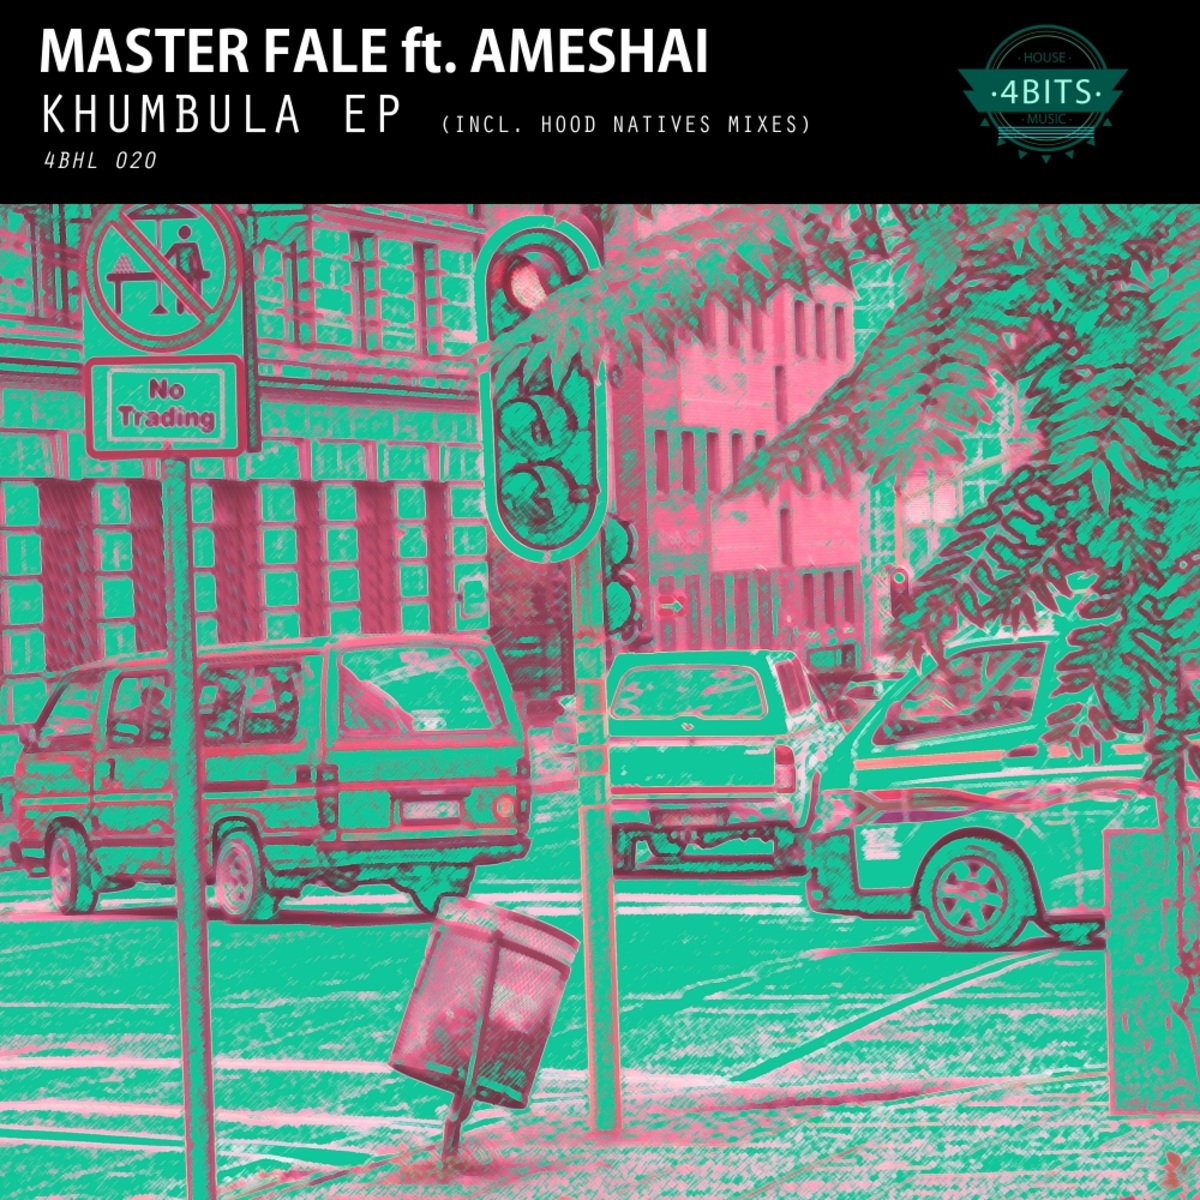 Master Fale ft Ameshai - Khumbula EP / 4 Bits House Music